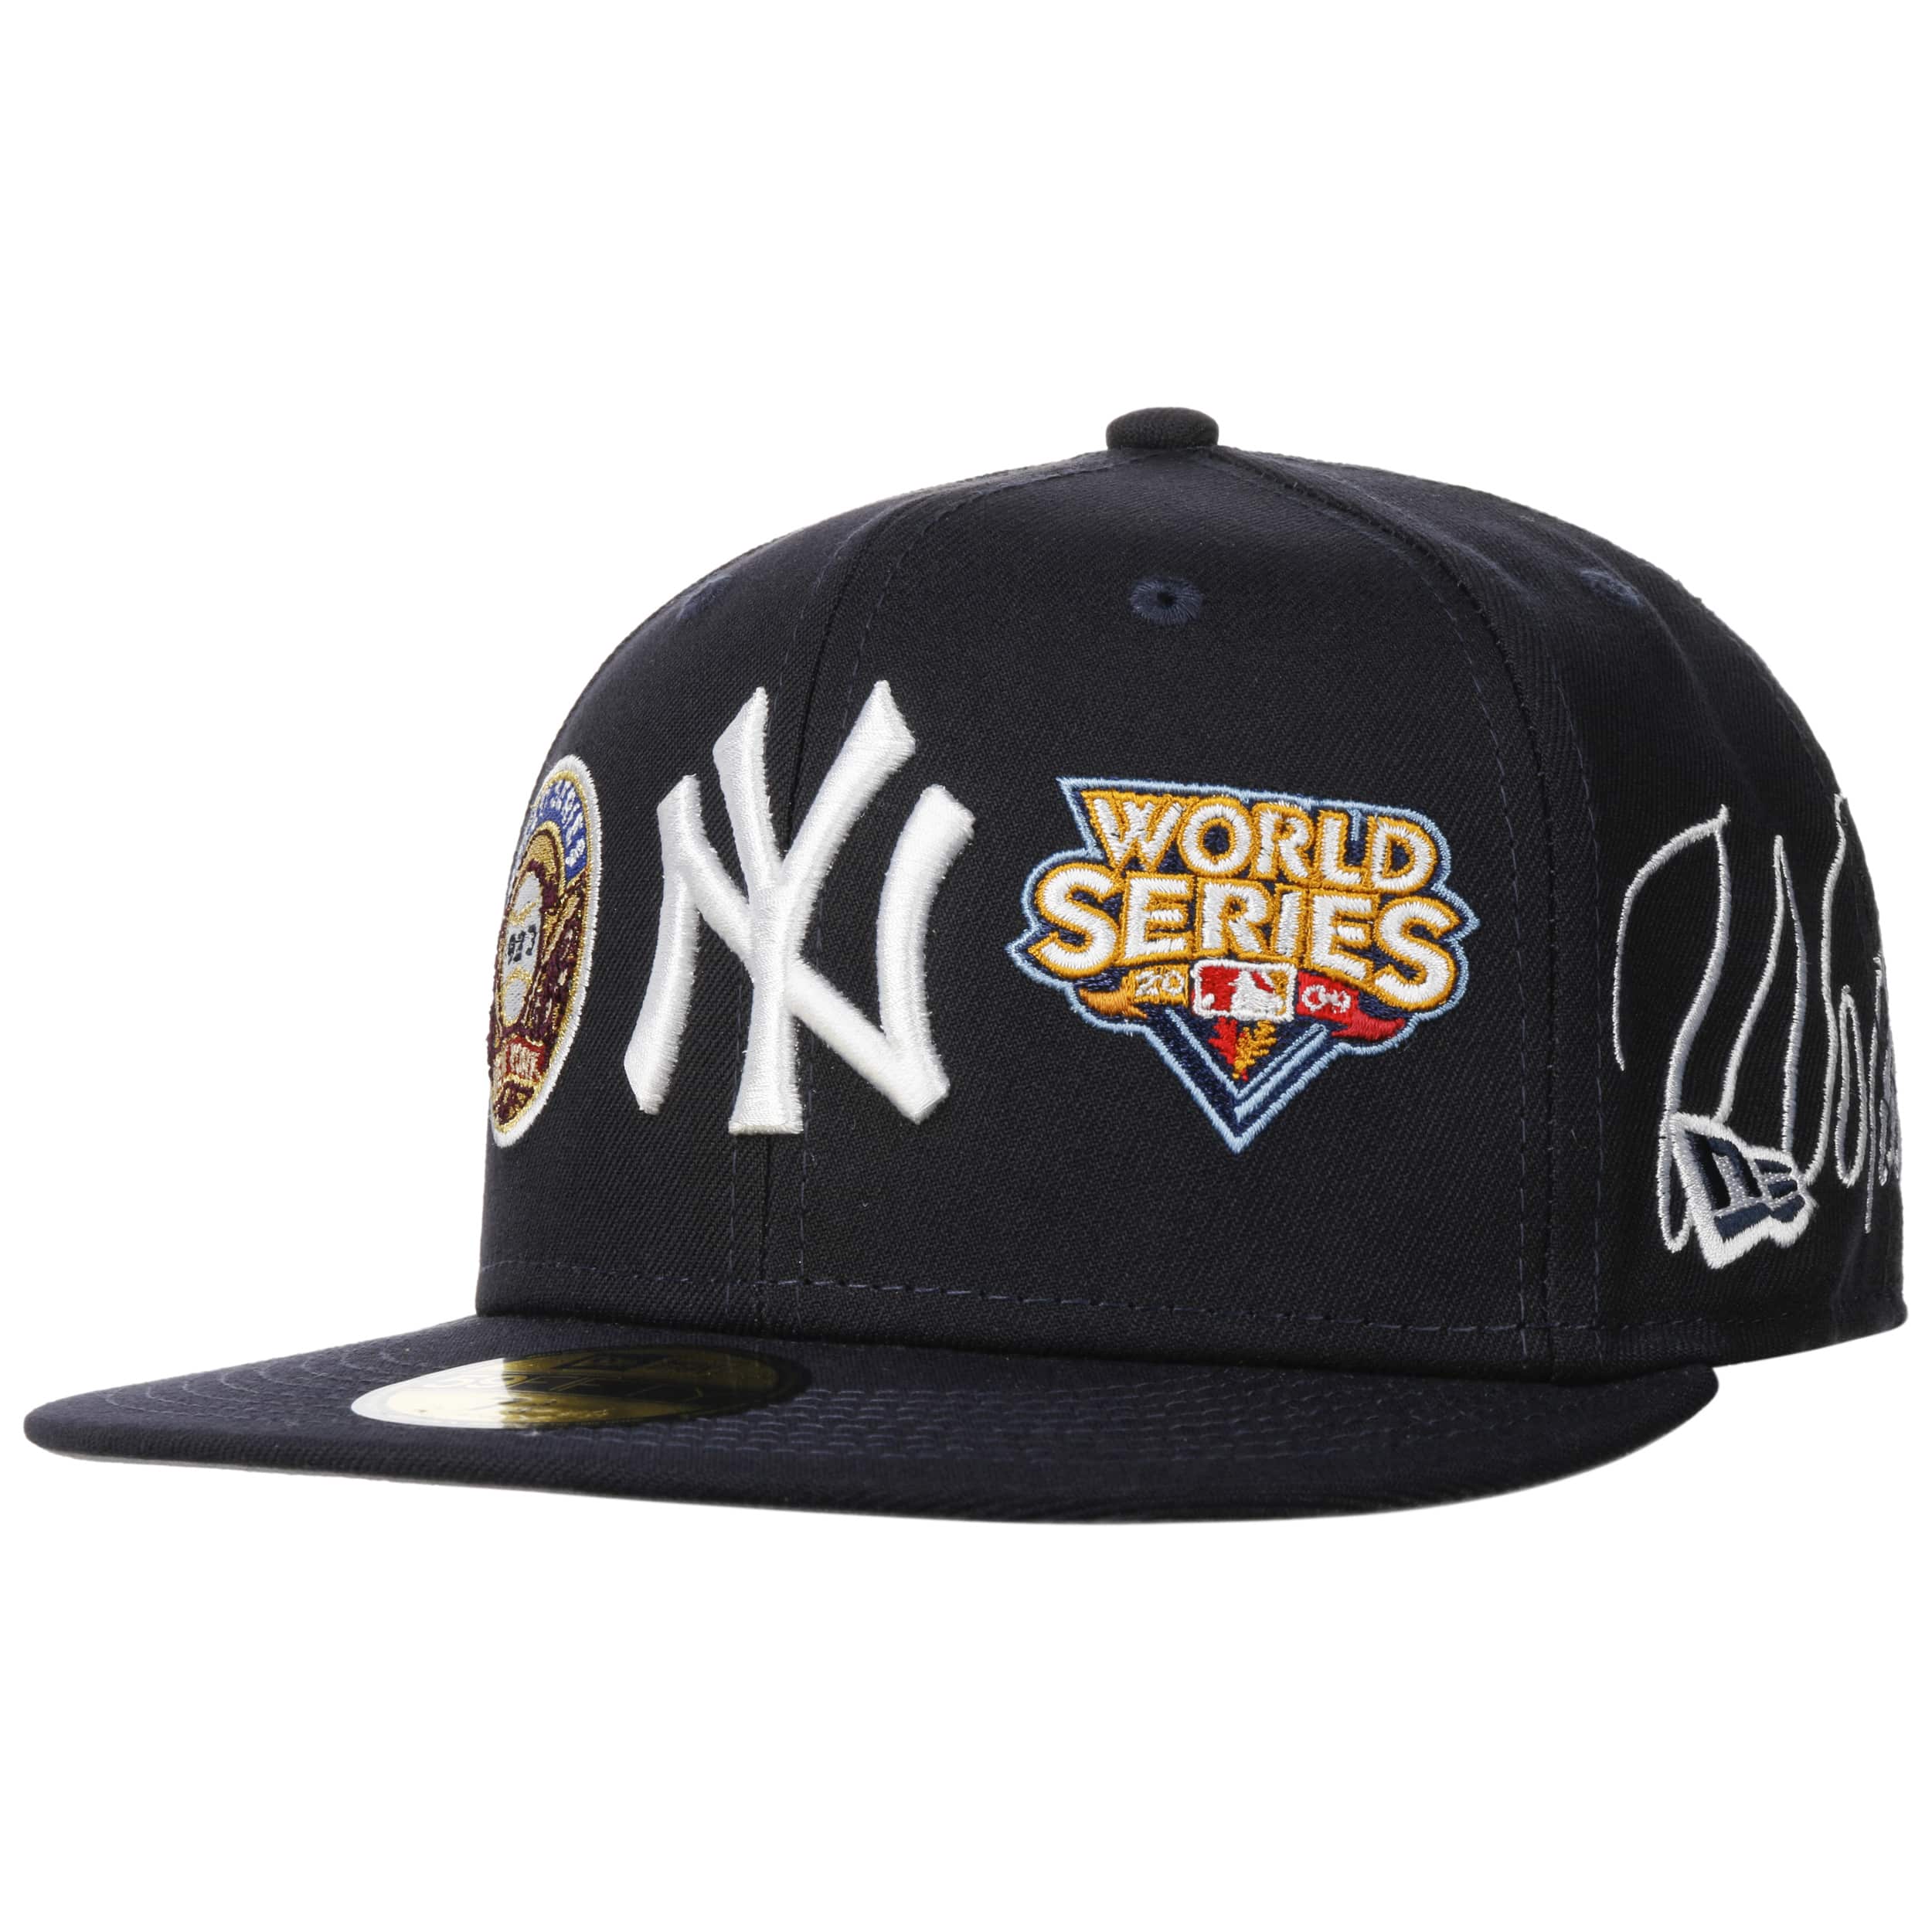 59Fifty MLB World Series Yankees Cap by New Era